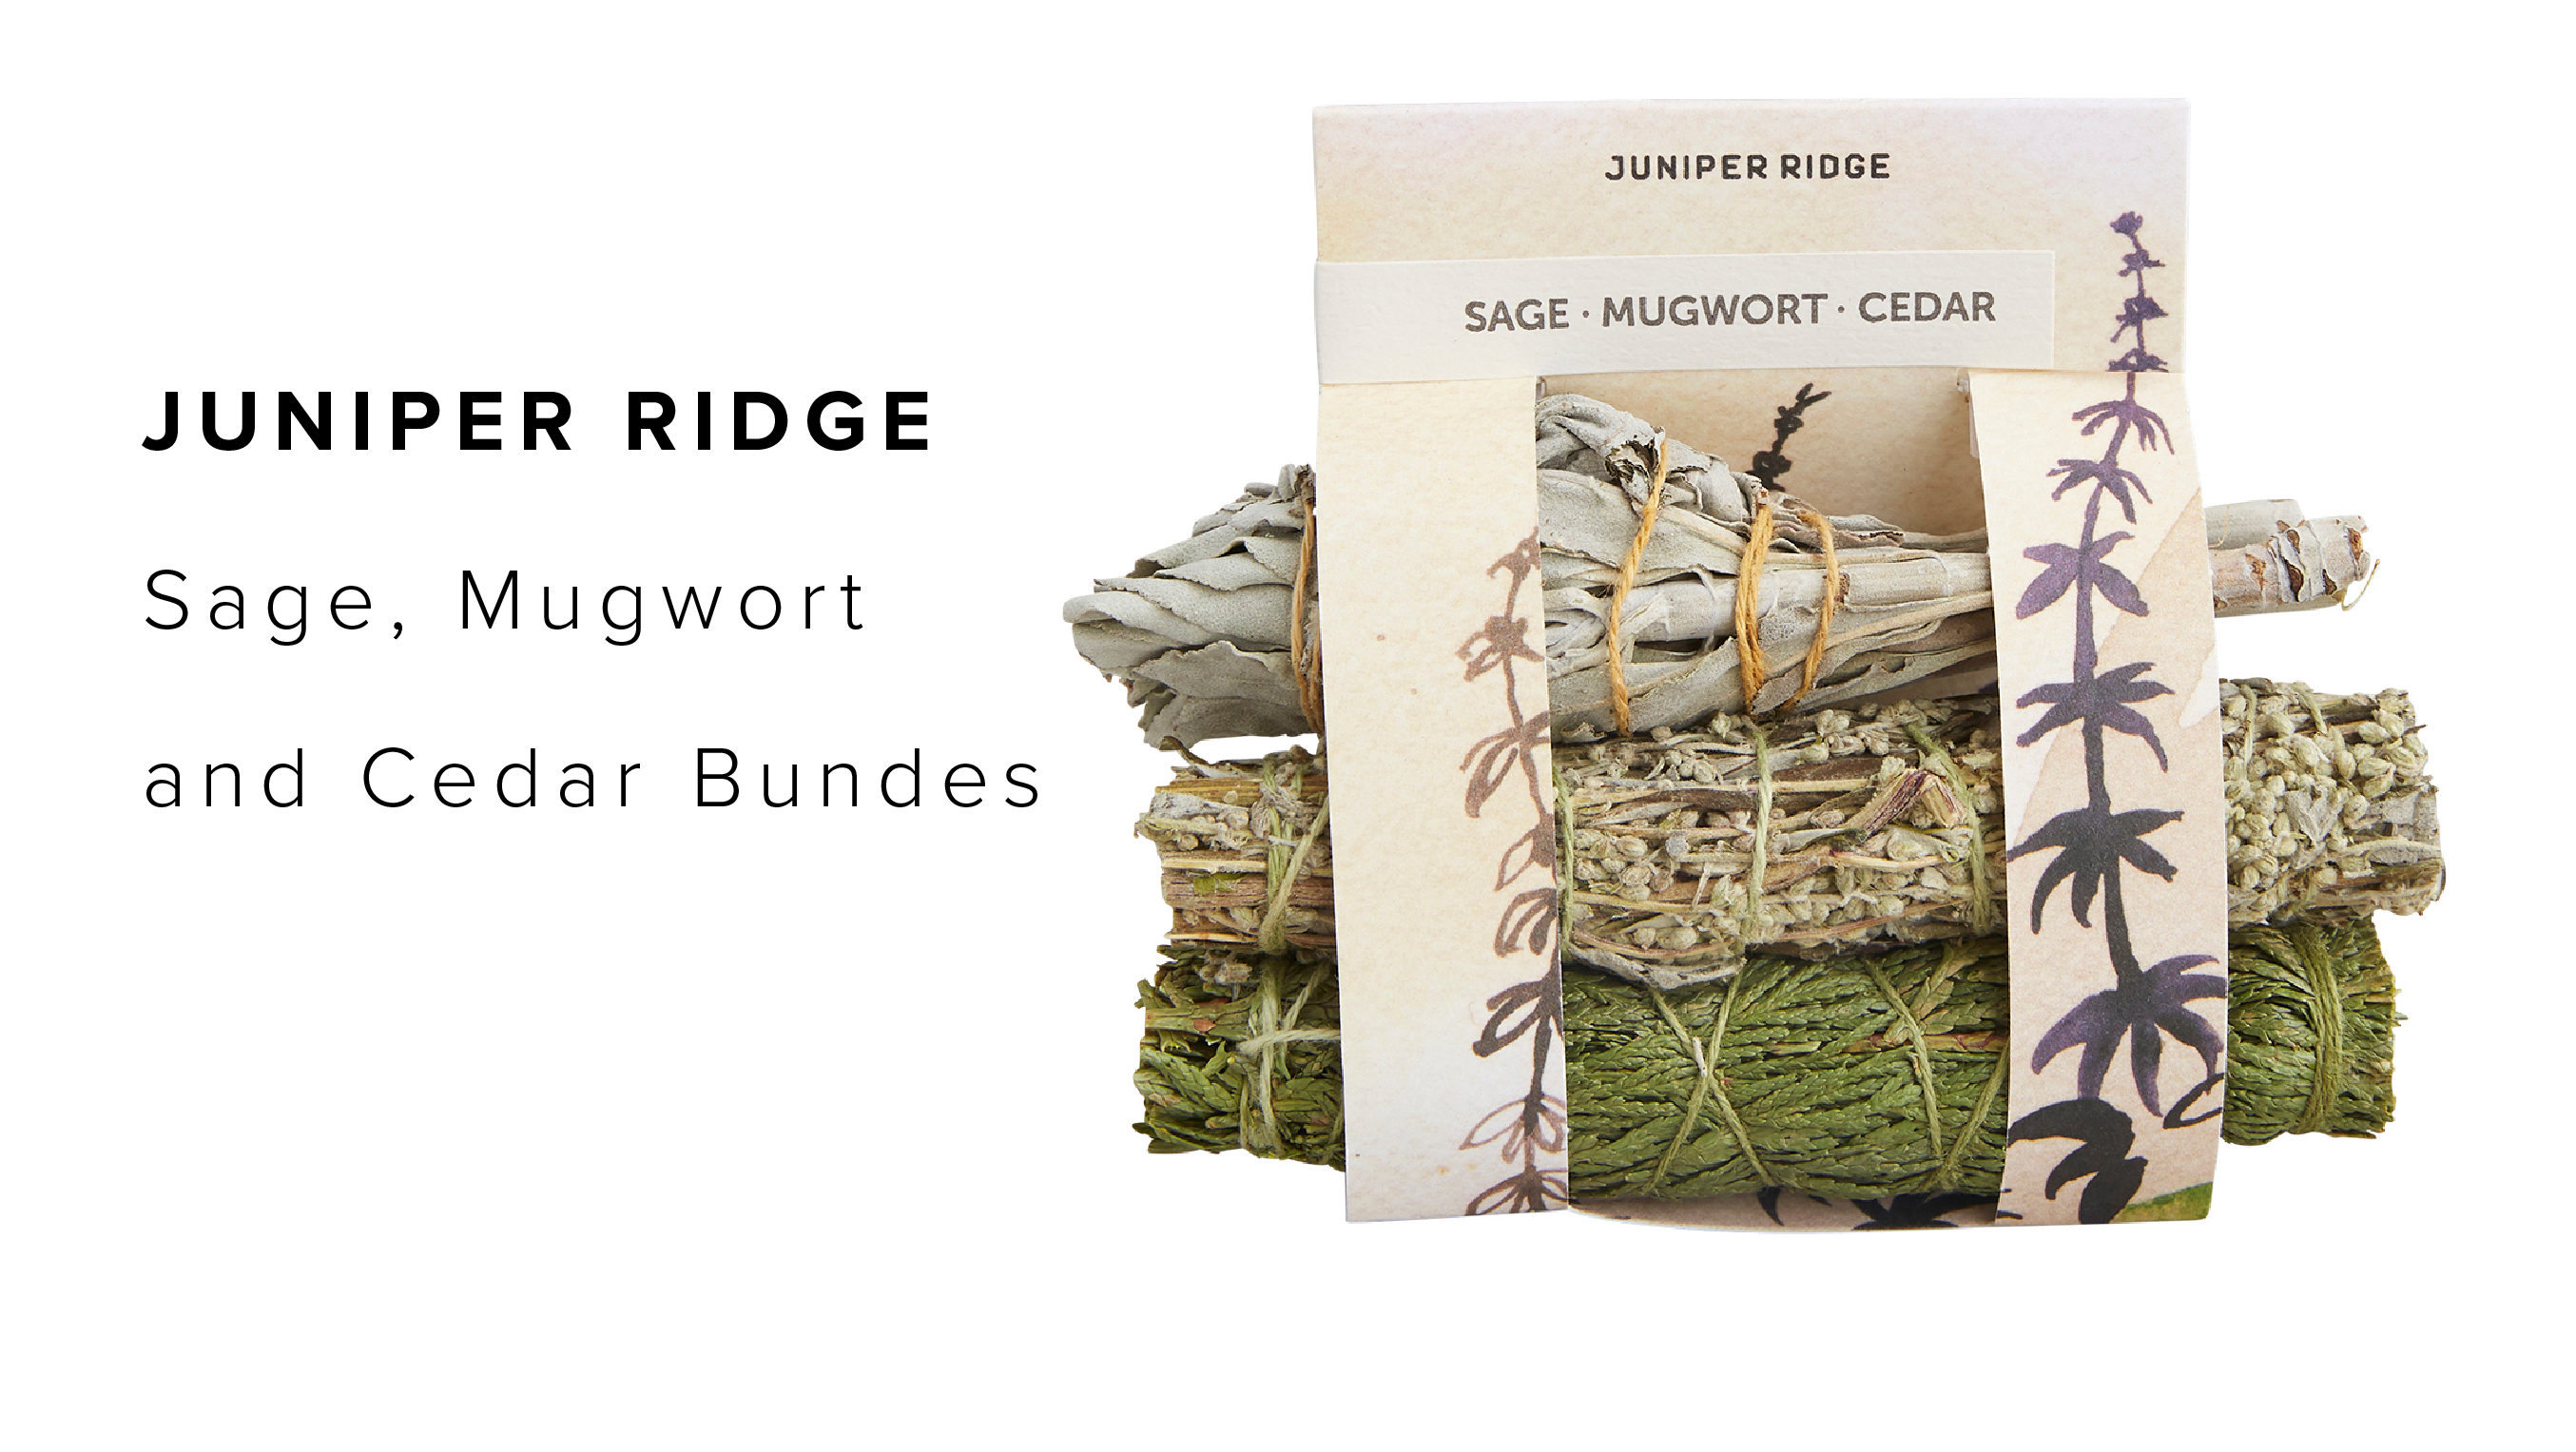 Juniper Ridge Sage, Mugwort and Cedar Bundes